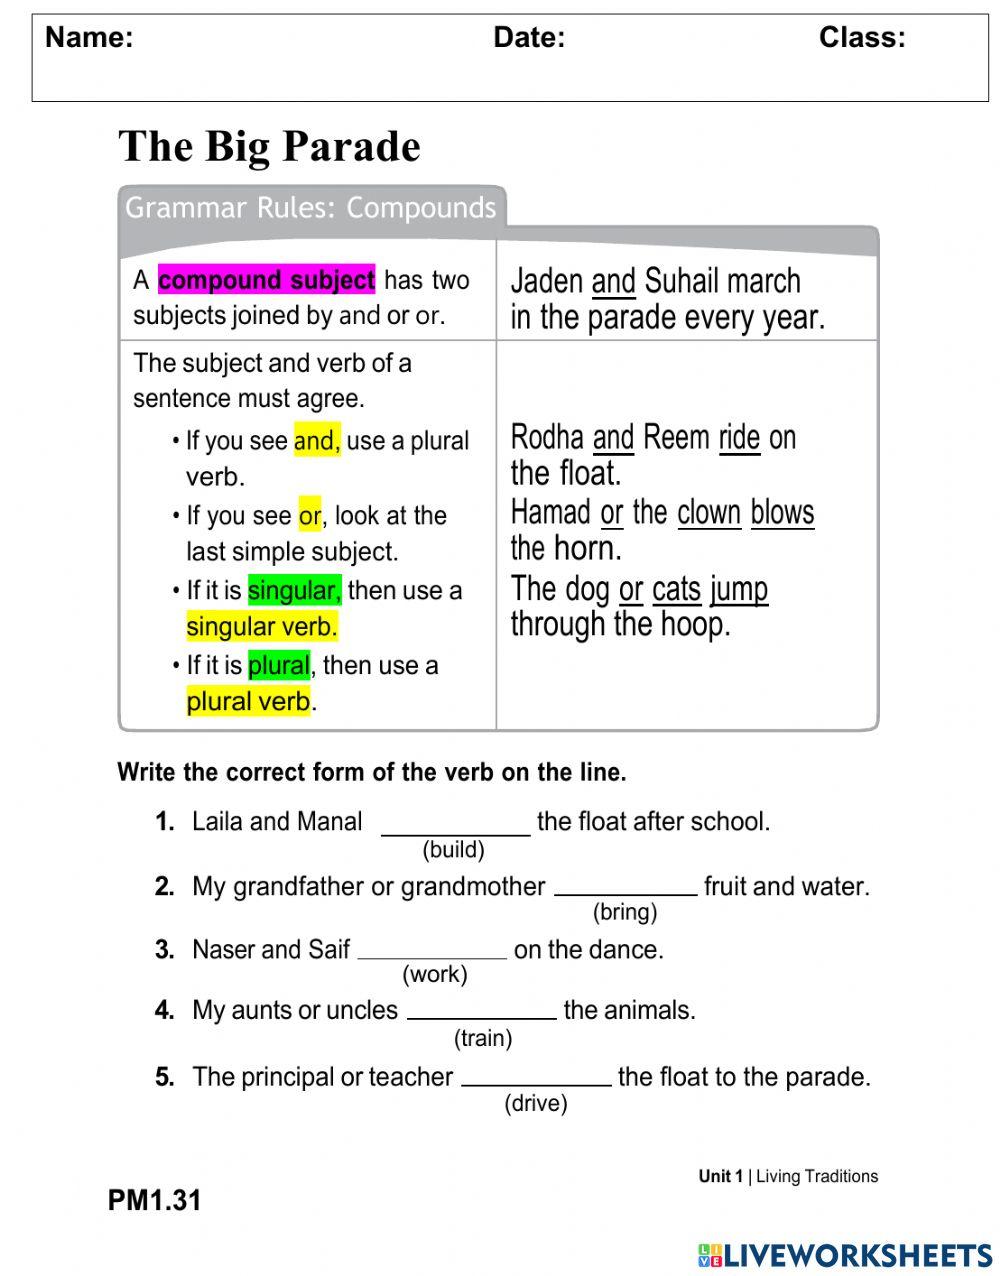 The Big Parade Worksheet